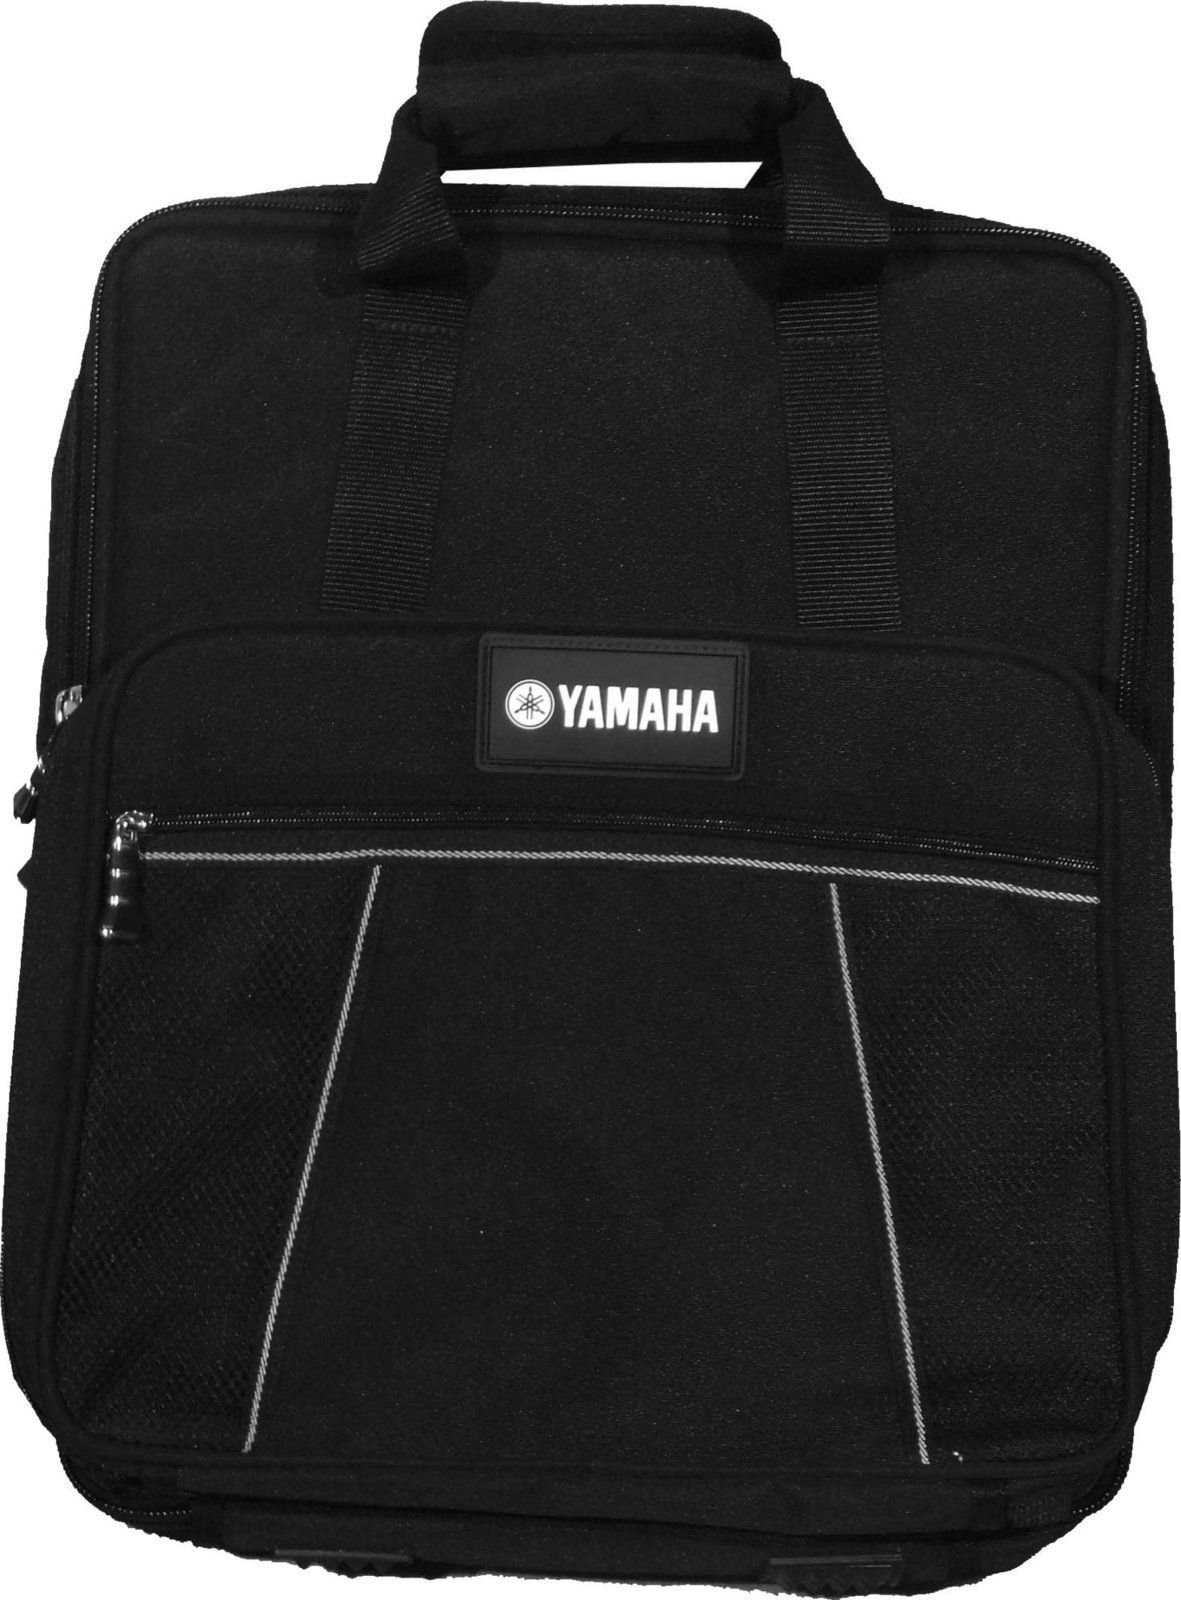 Obal/ kufr pro zvukovou techniku Yamaha SCMG12